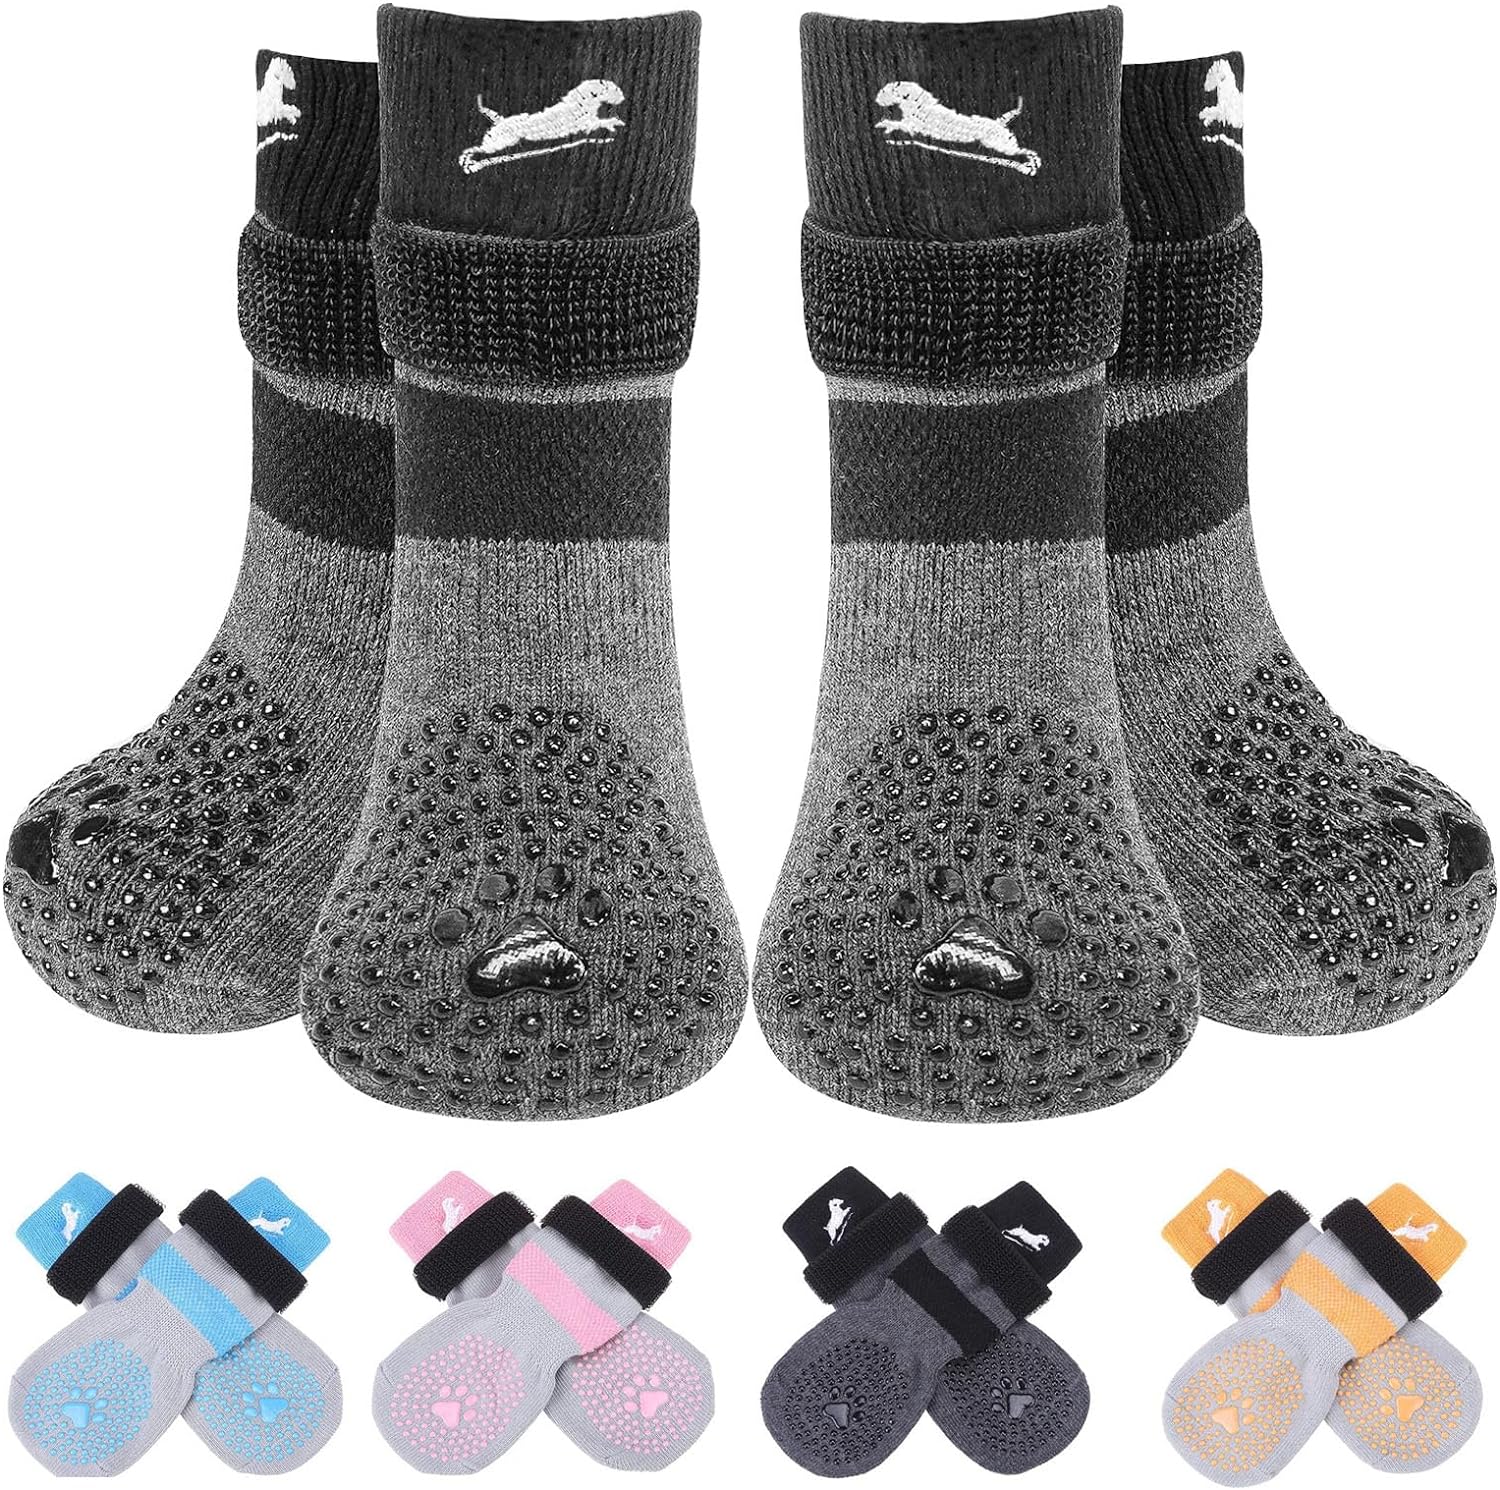 EXPAWLORER 6 Pack Double Sides Anti-Slip Dog Socks -Embroidered